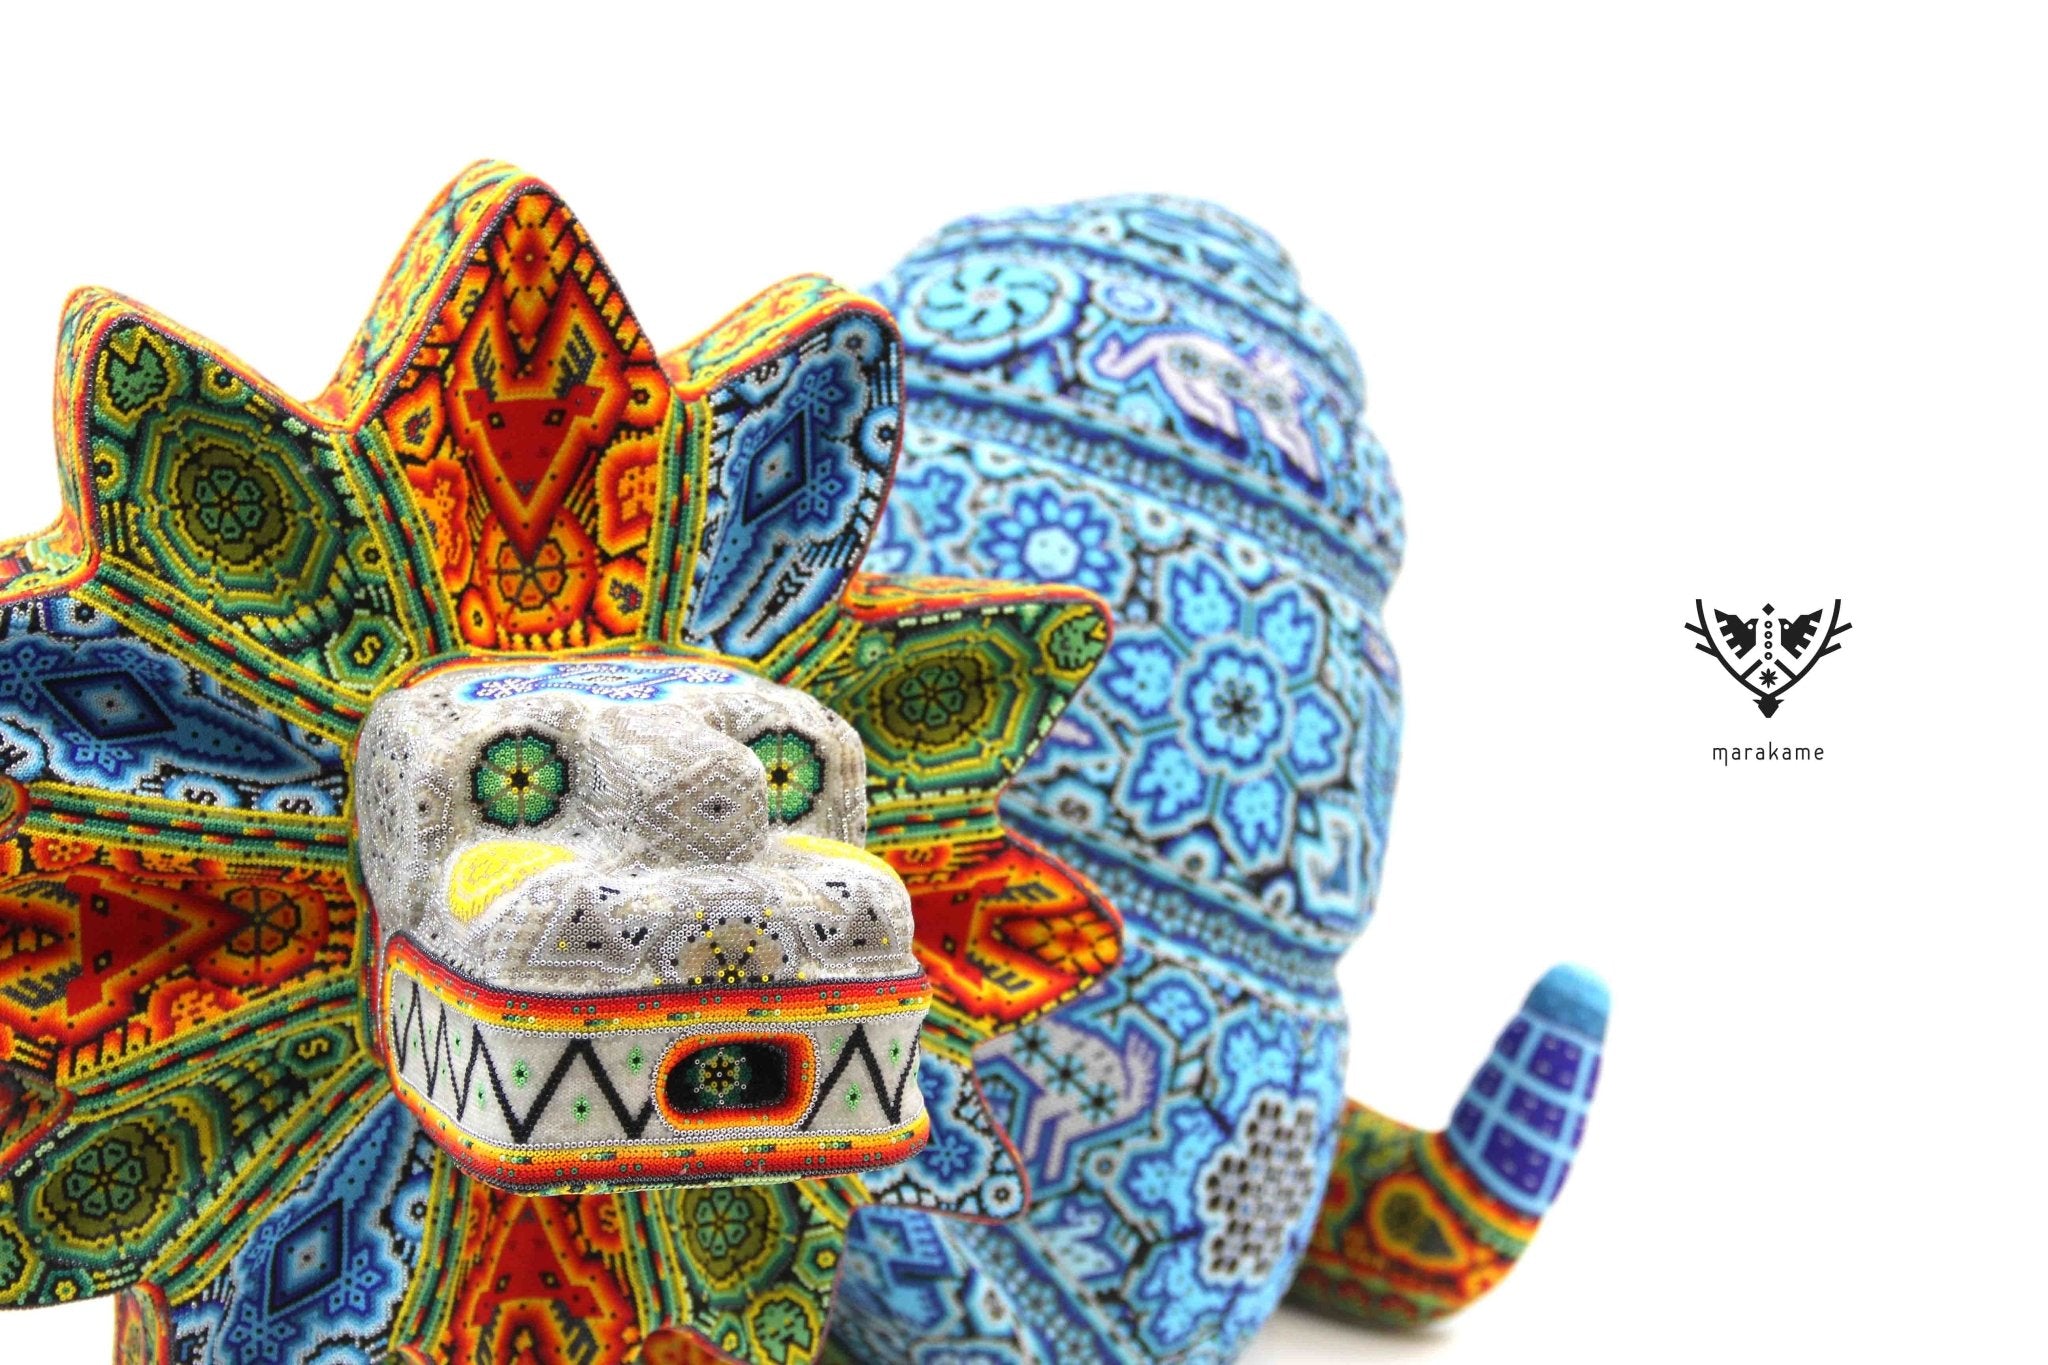 Huichol Art Sculpture - Quetzalcoatl Snail - Huichol Art - Marakame